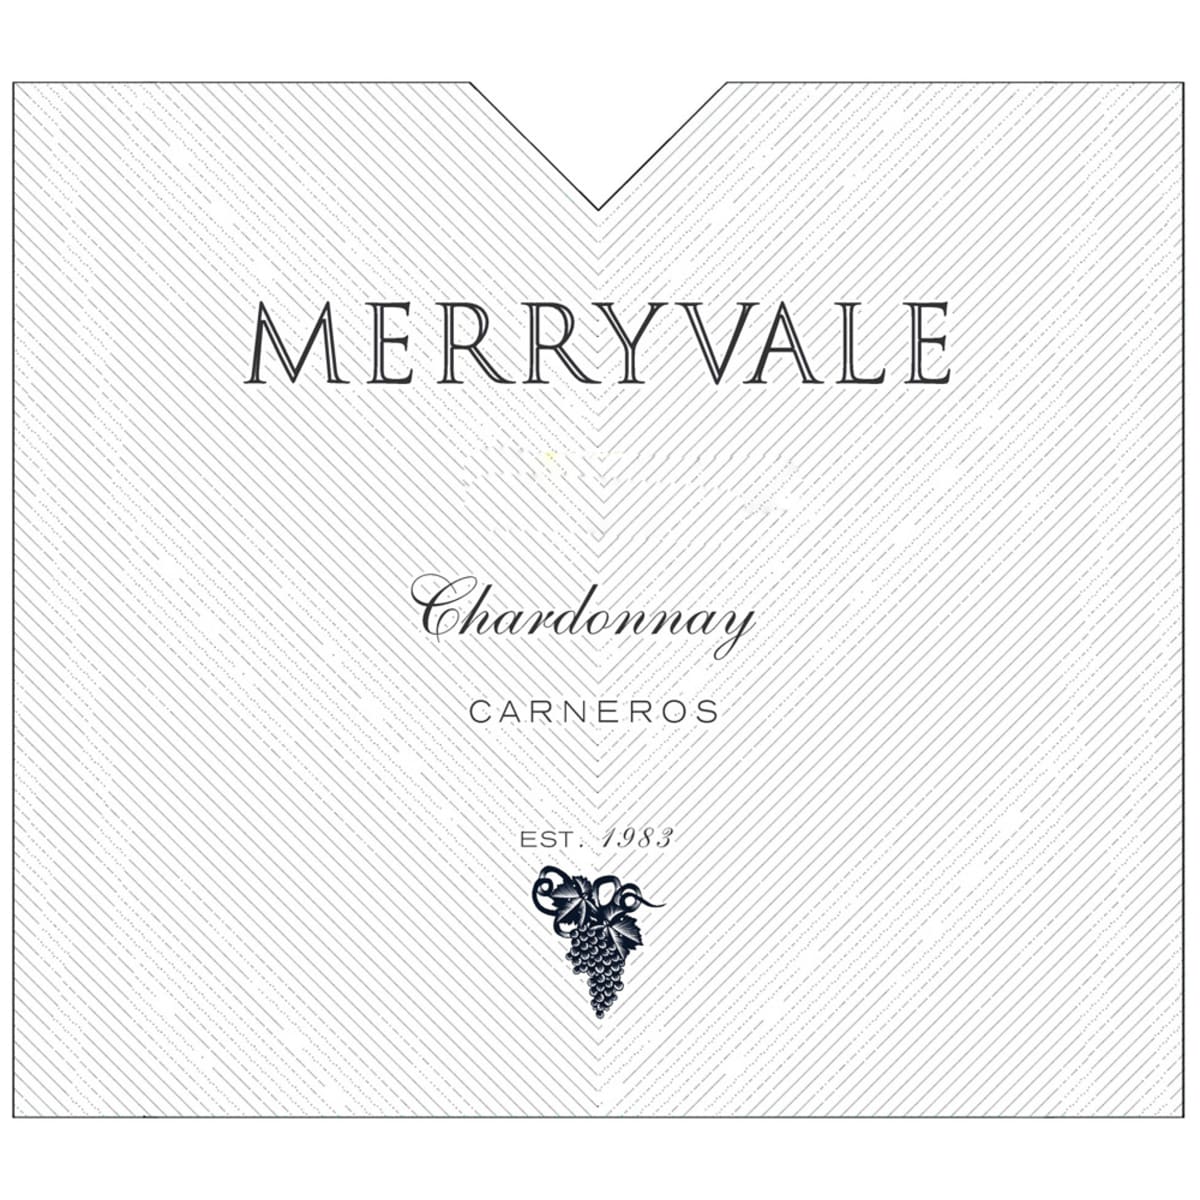 Merryvale Carneros Chardonnay 2014 Front Label